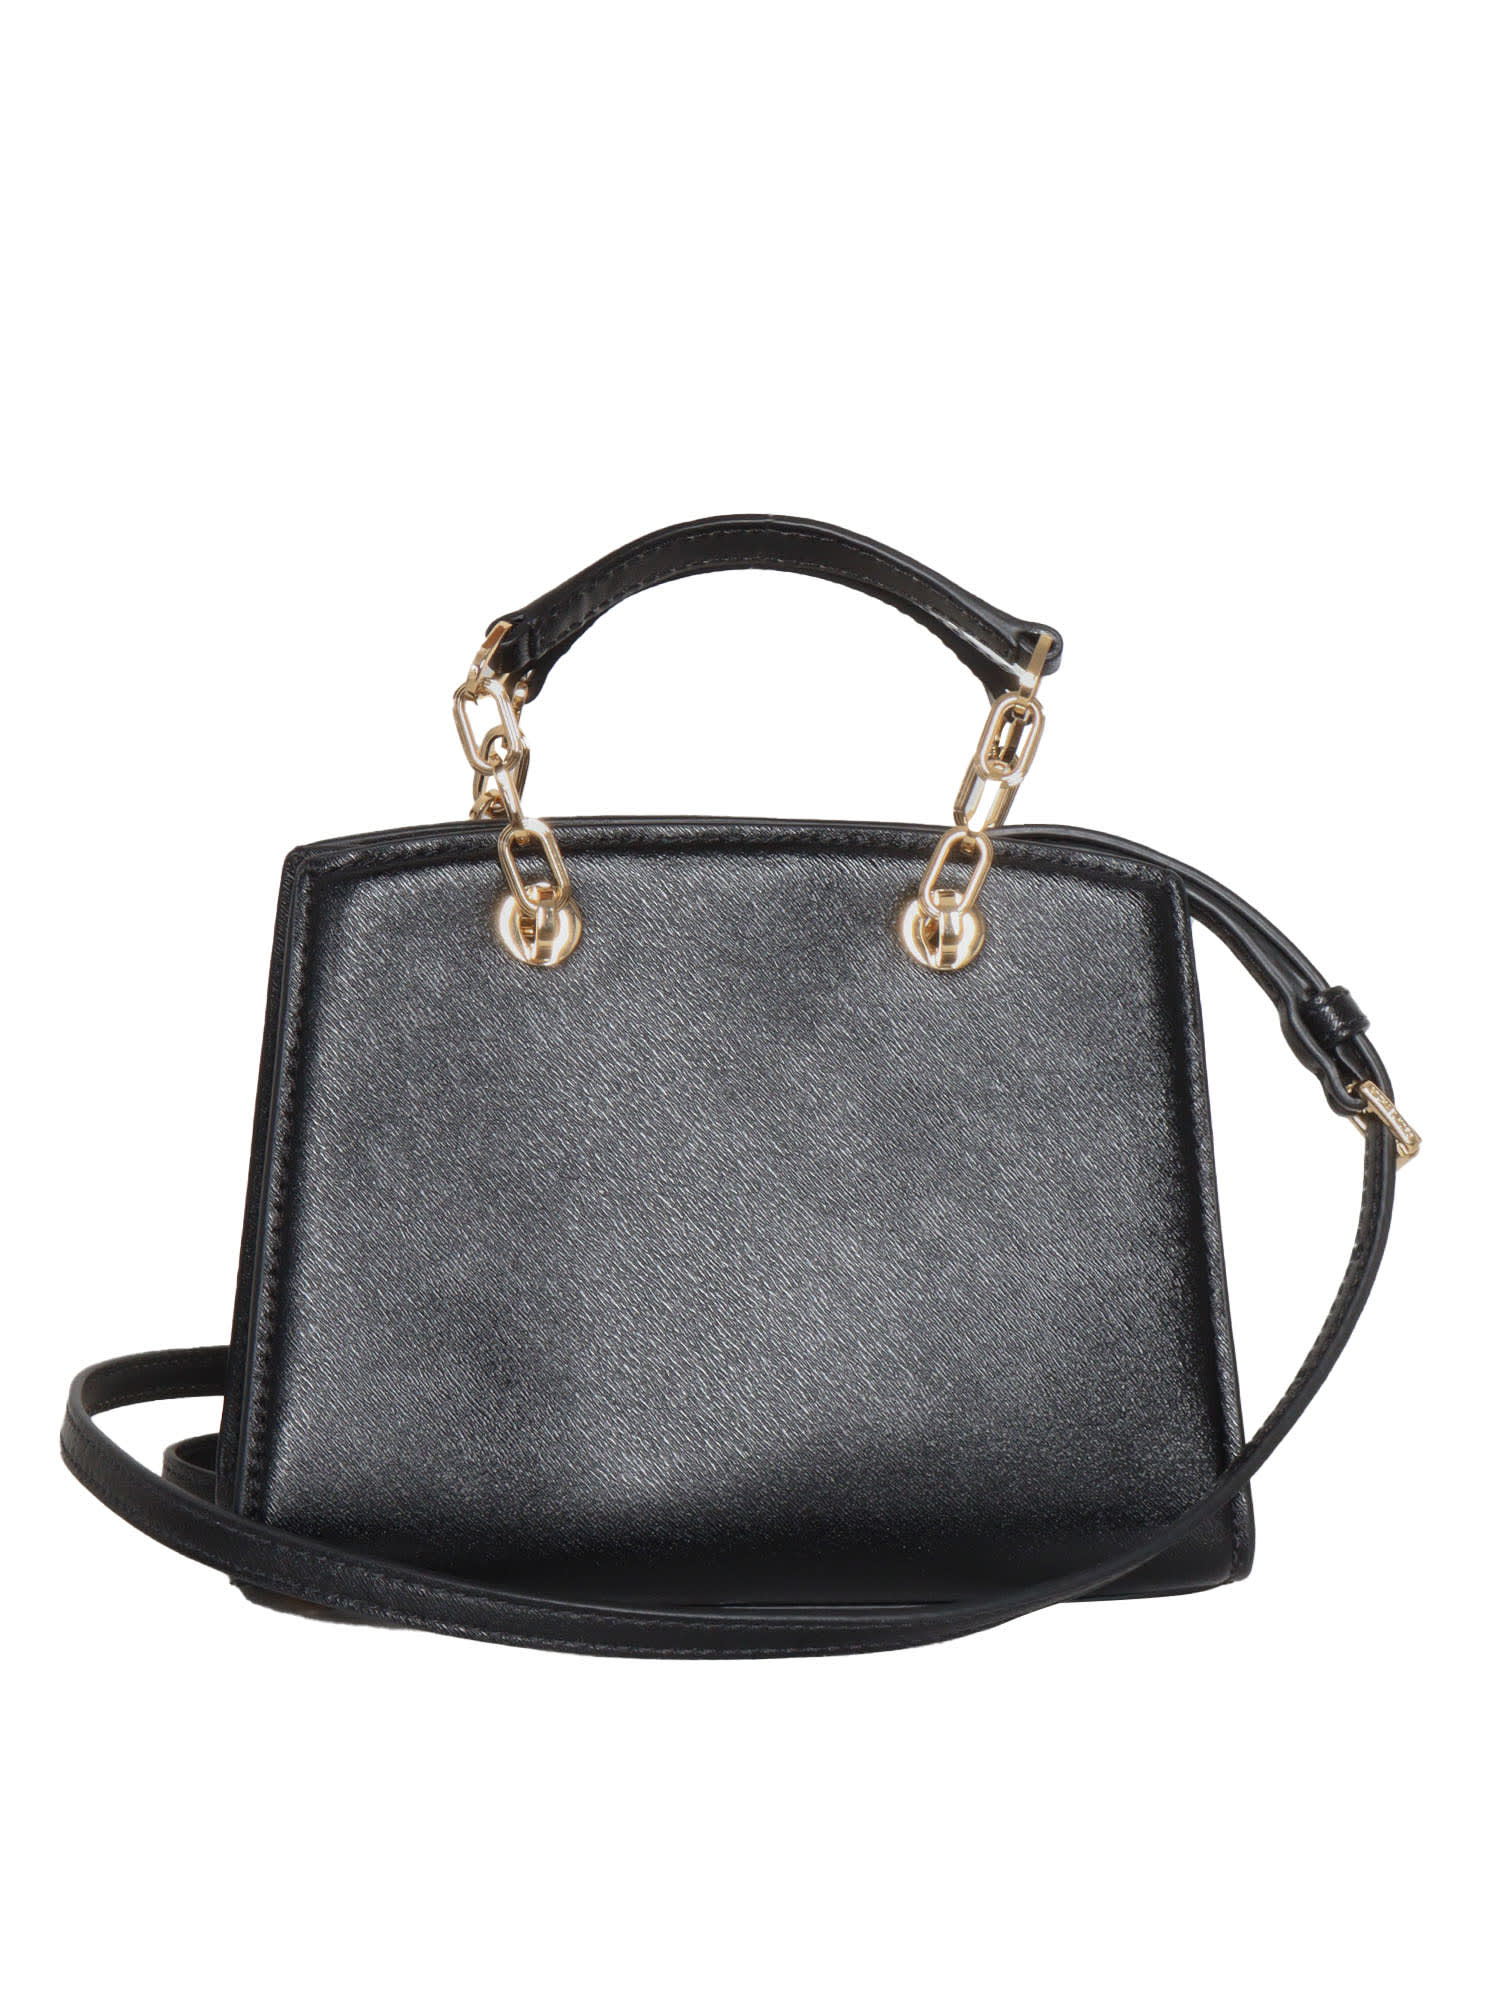 Shop Michael Kors Black Xbody Leather Handbag